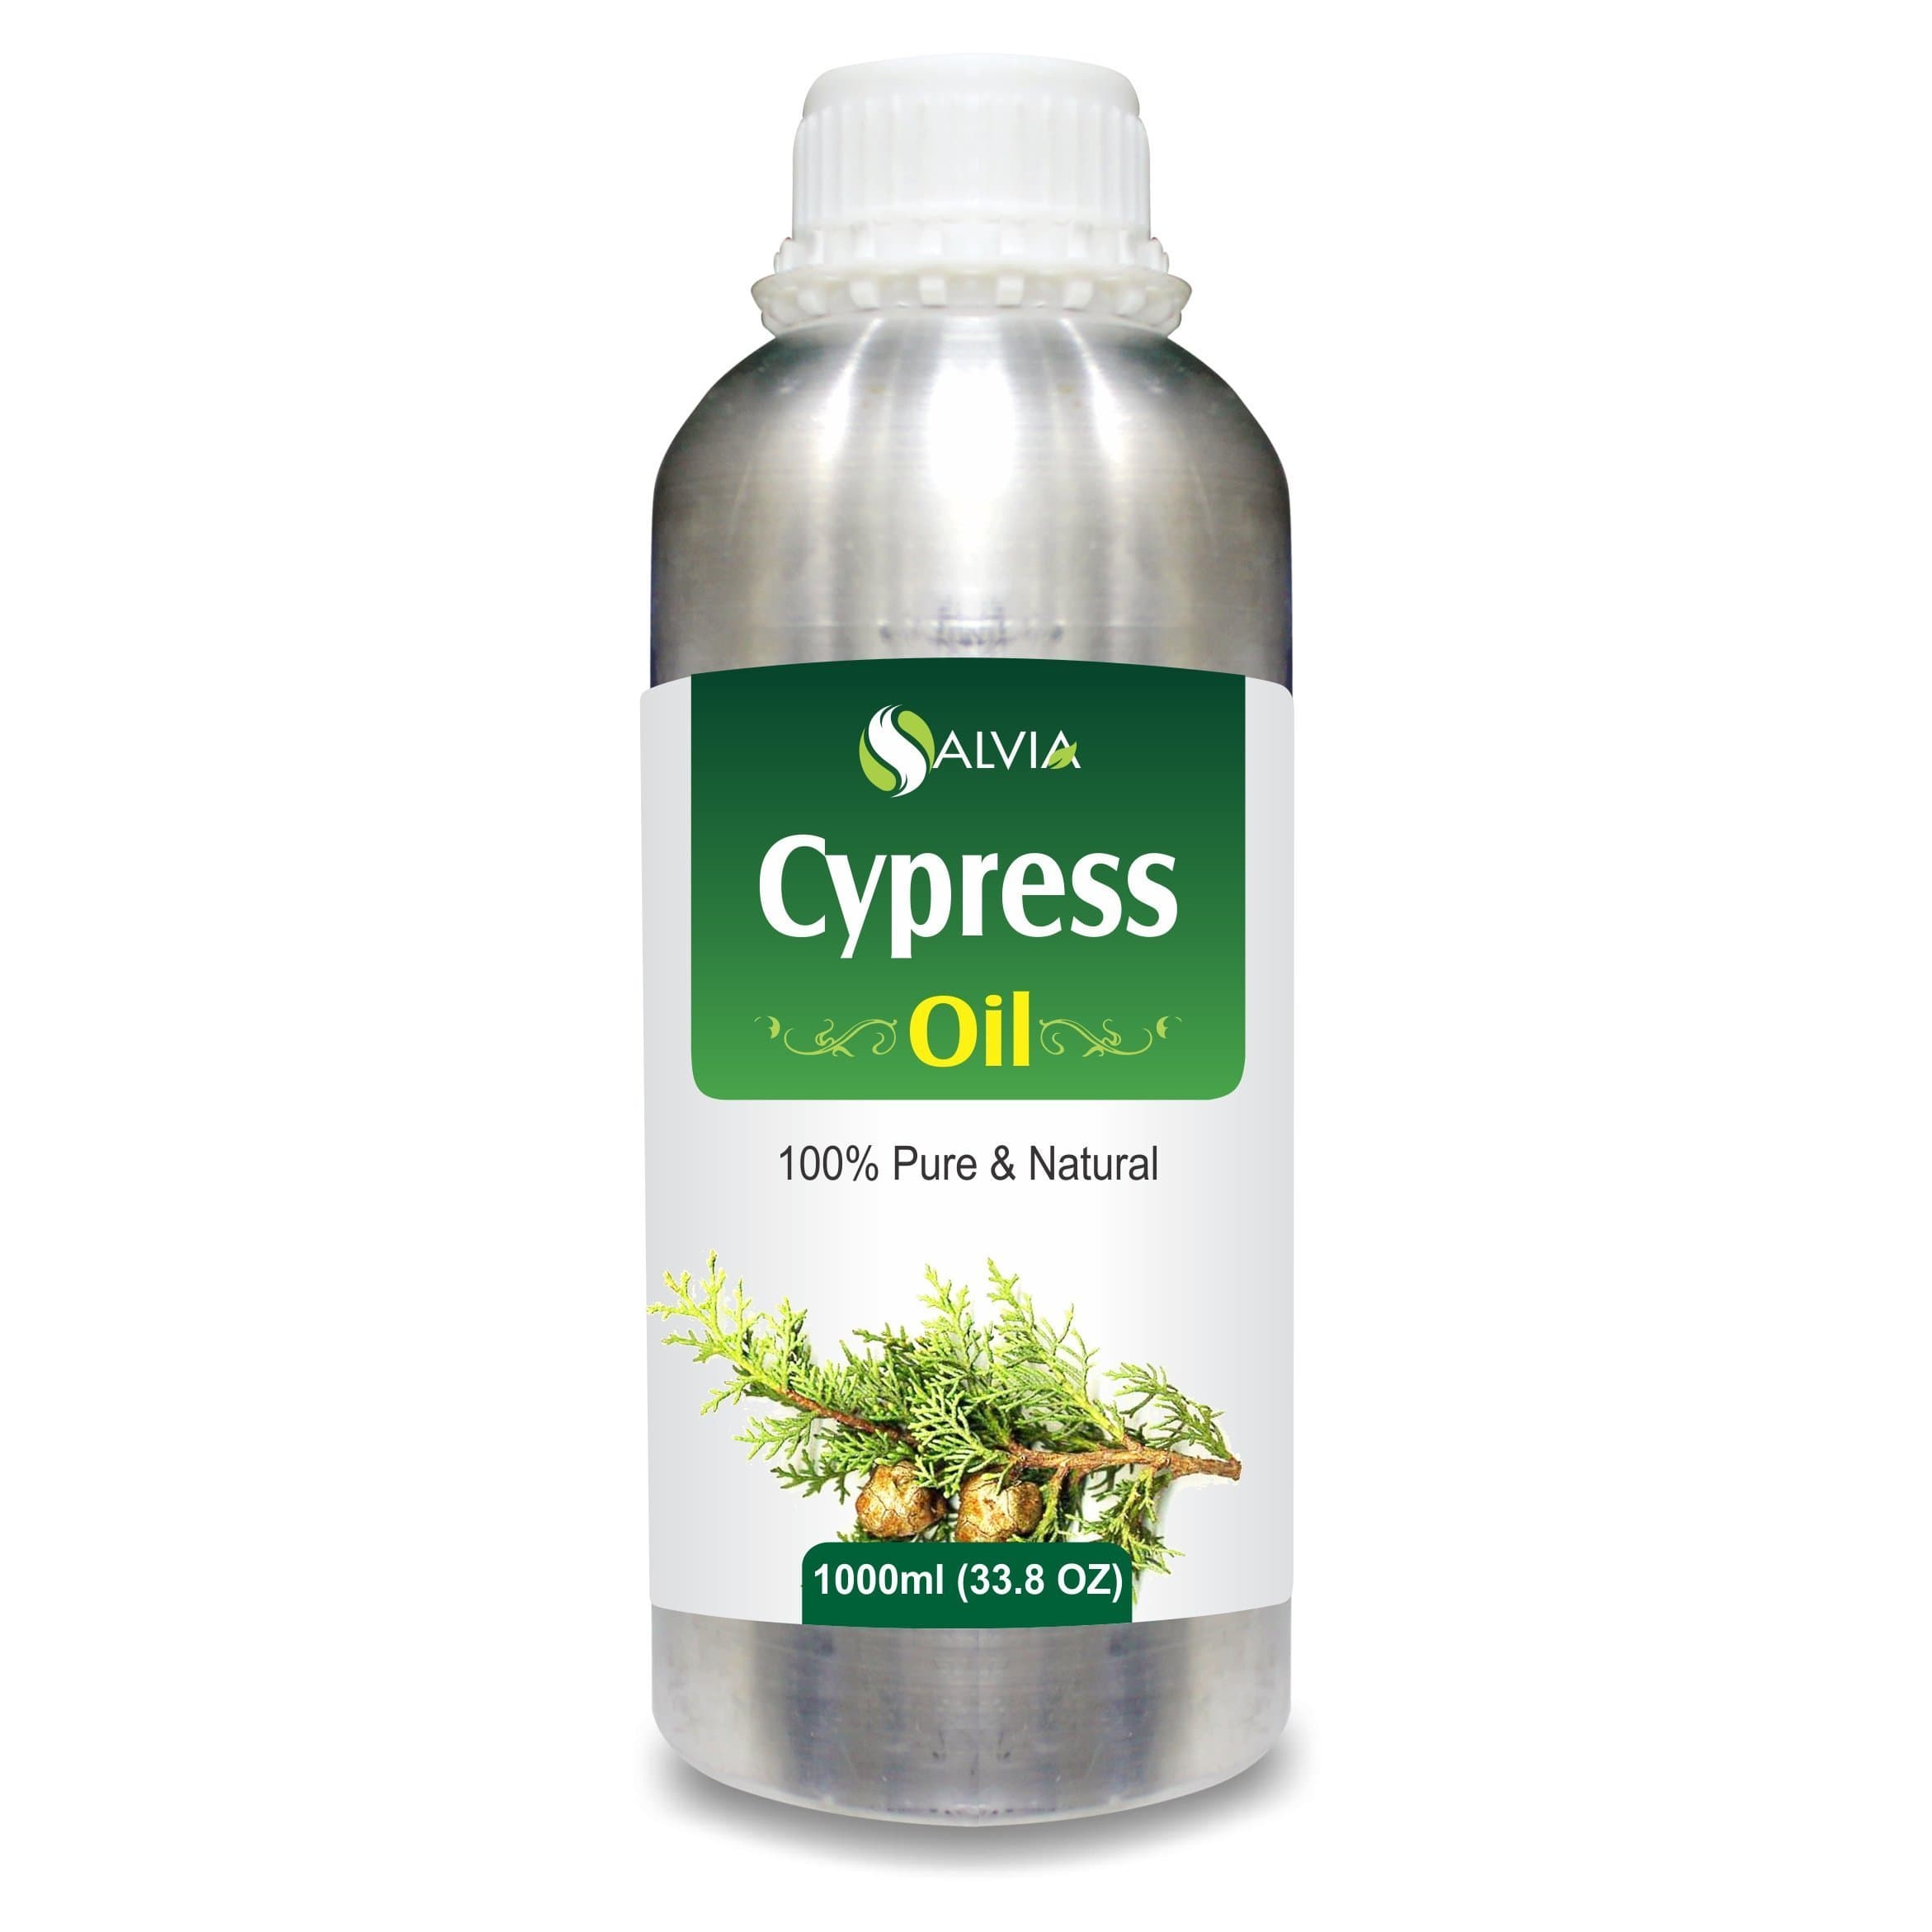 cypress oil in tamil